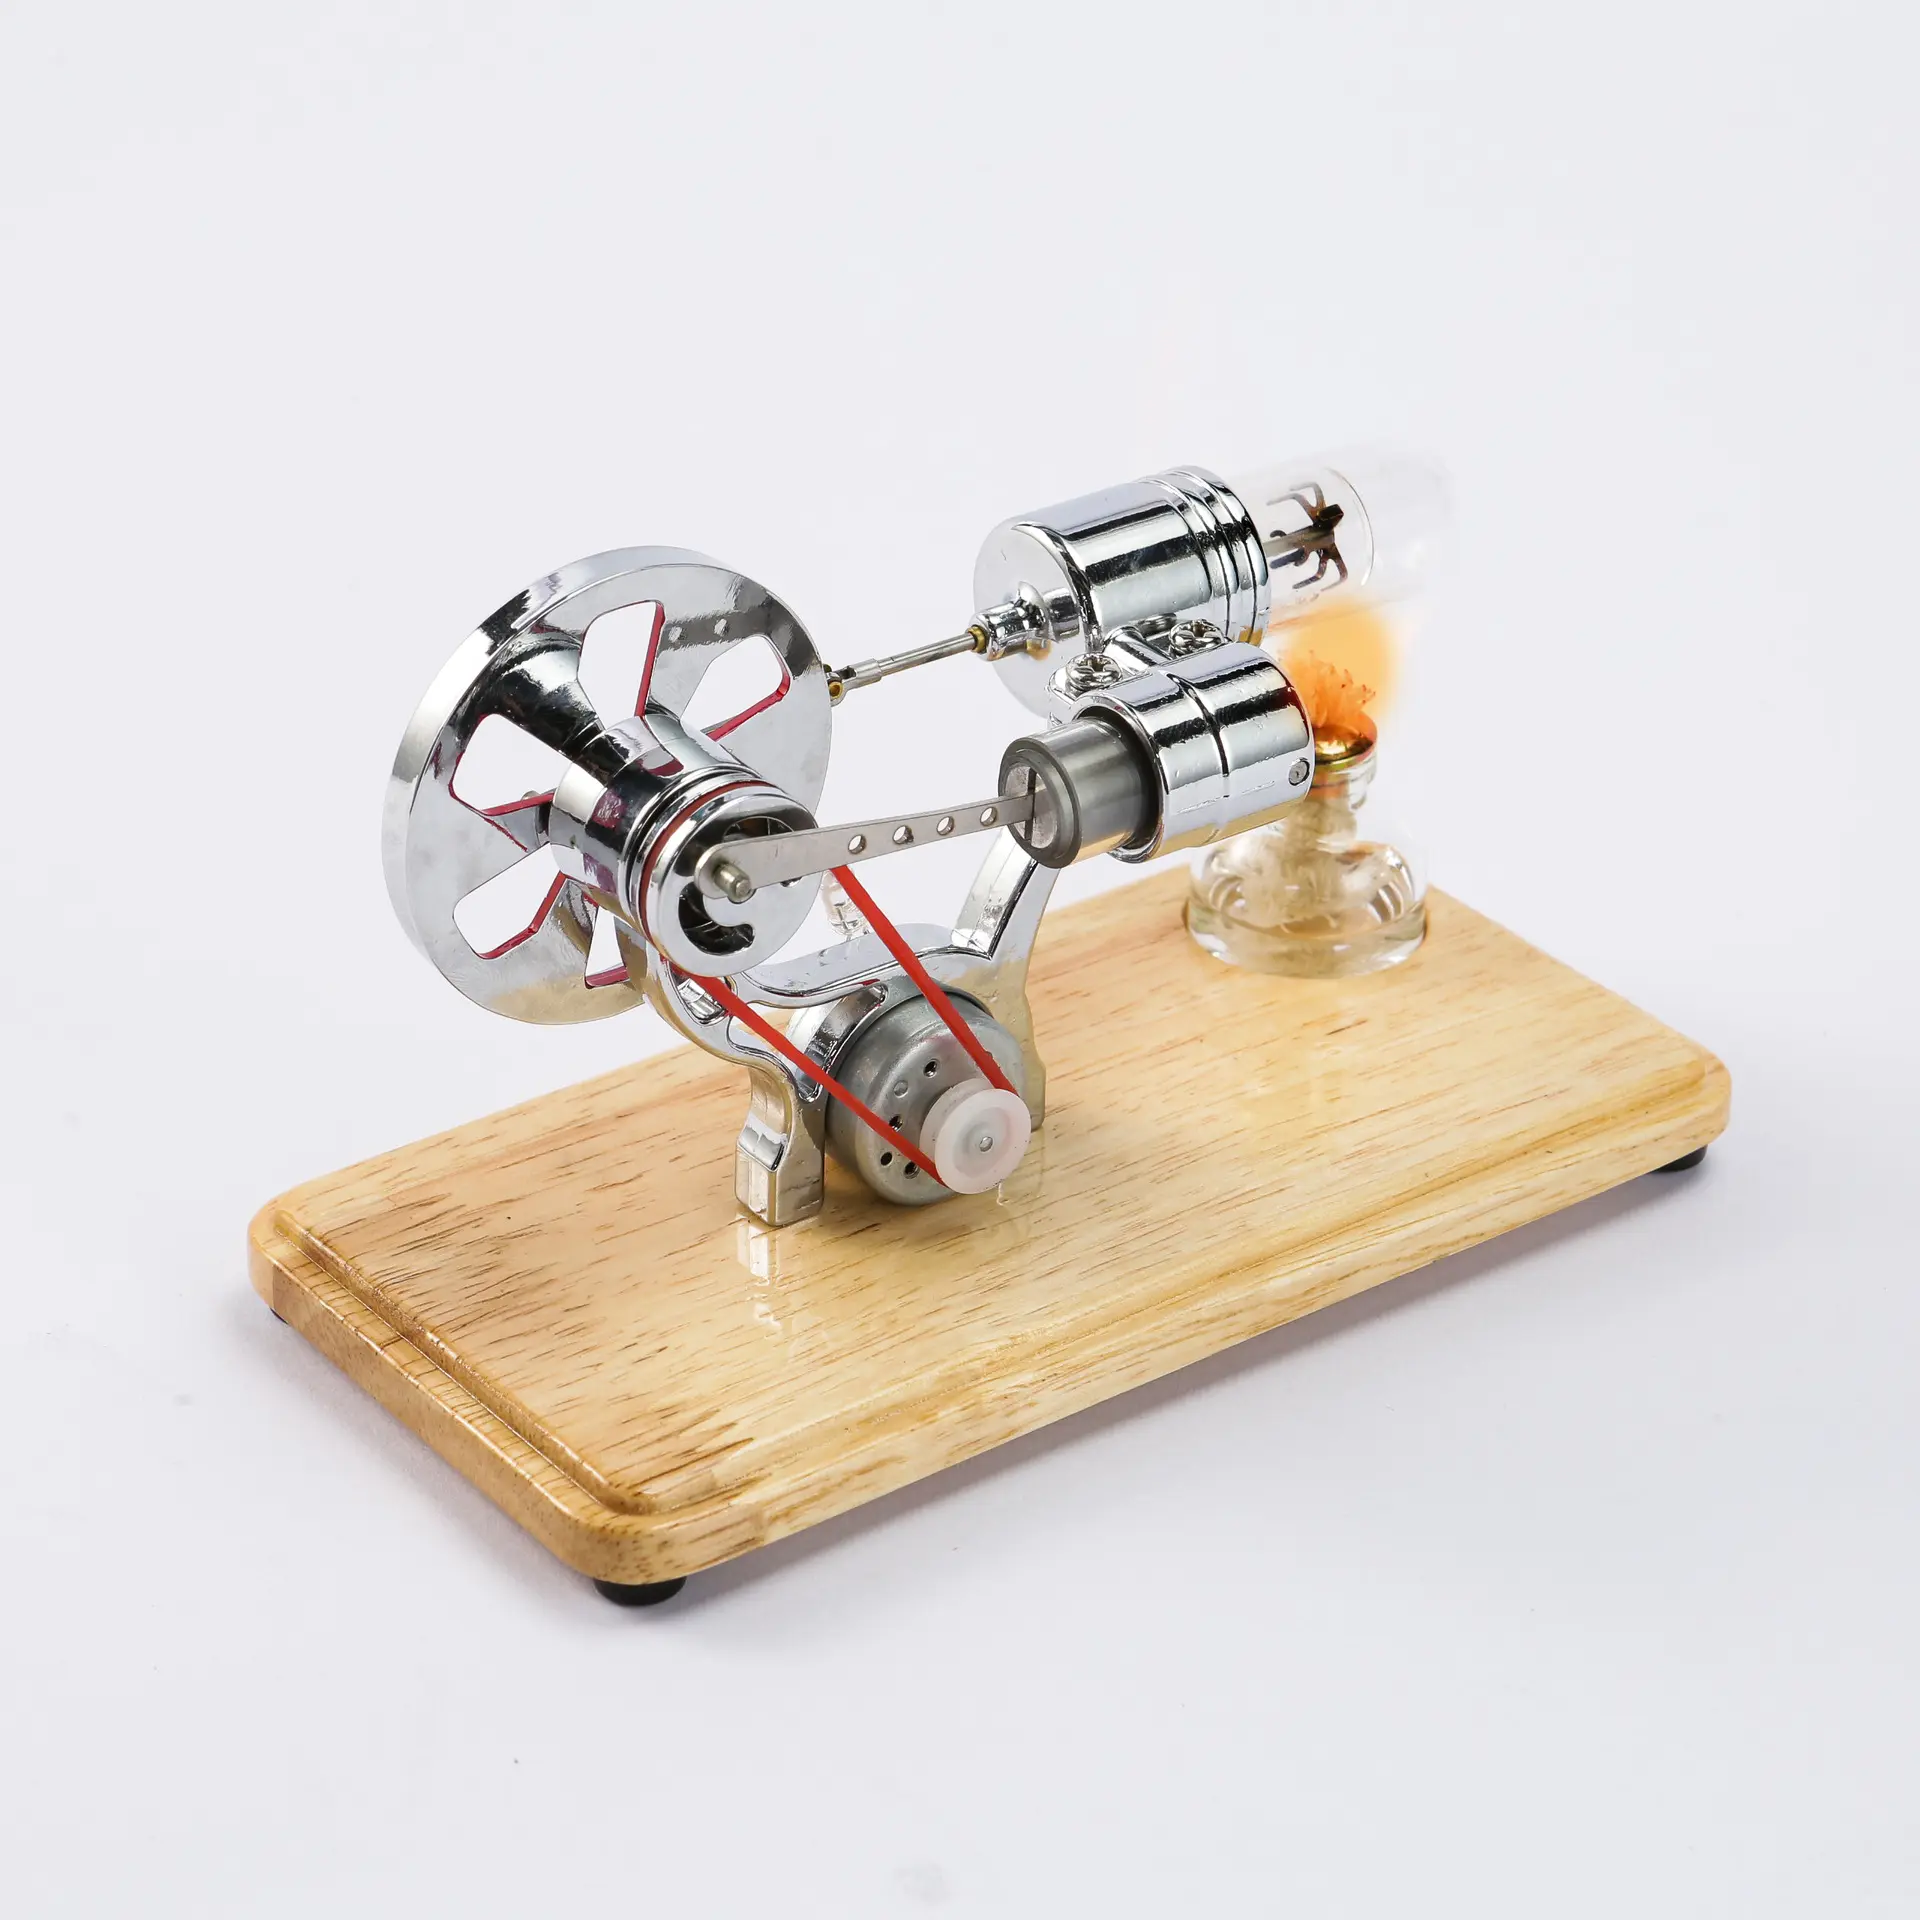 Stirling-motor de metal de juguete, generador, ersatteil, ersatzteil, stirling